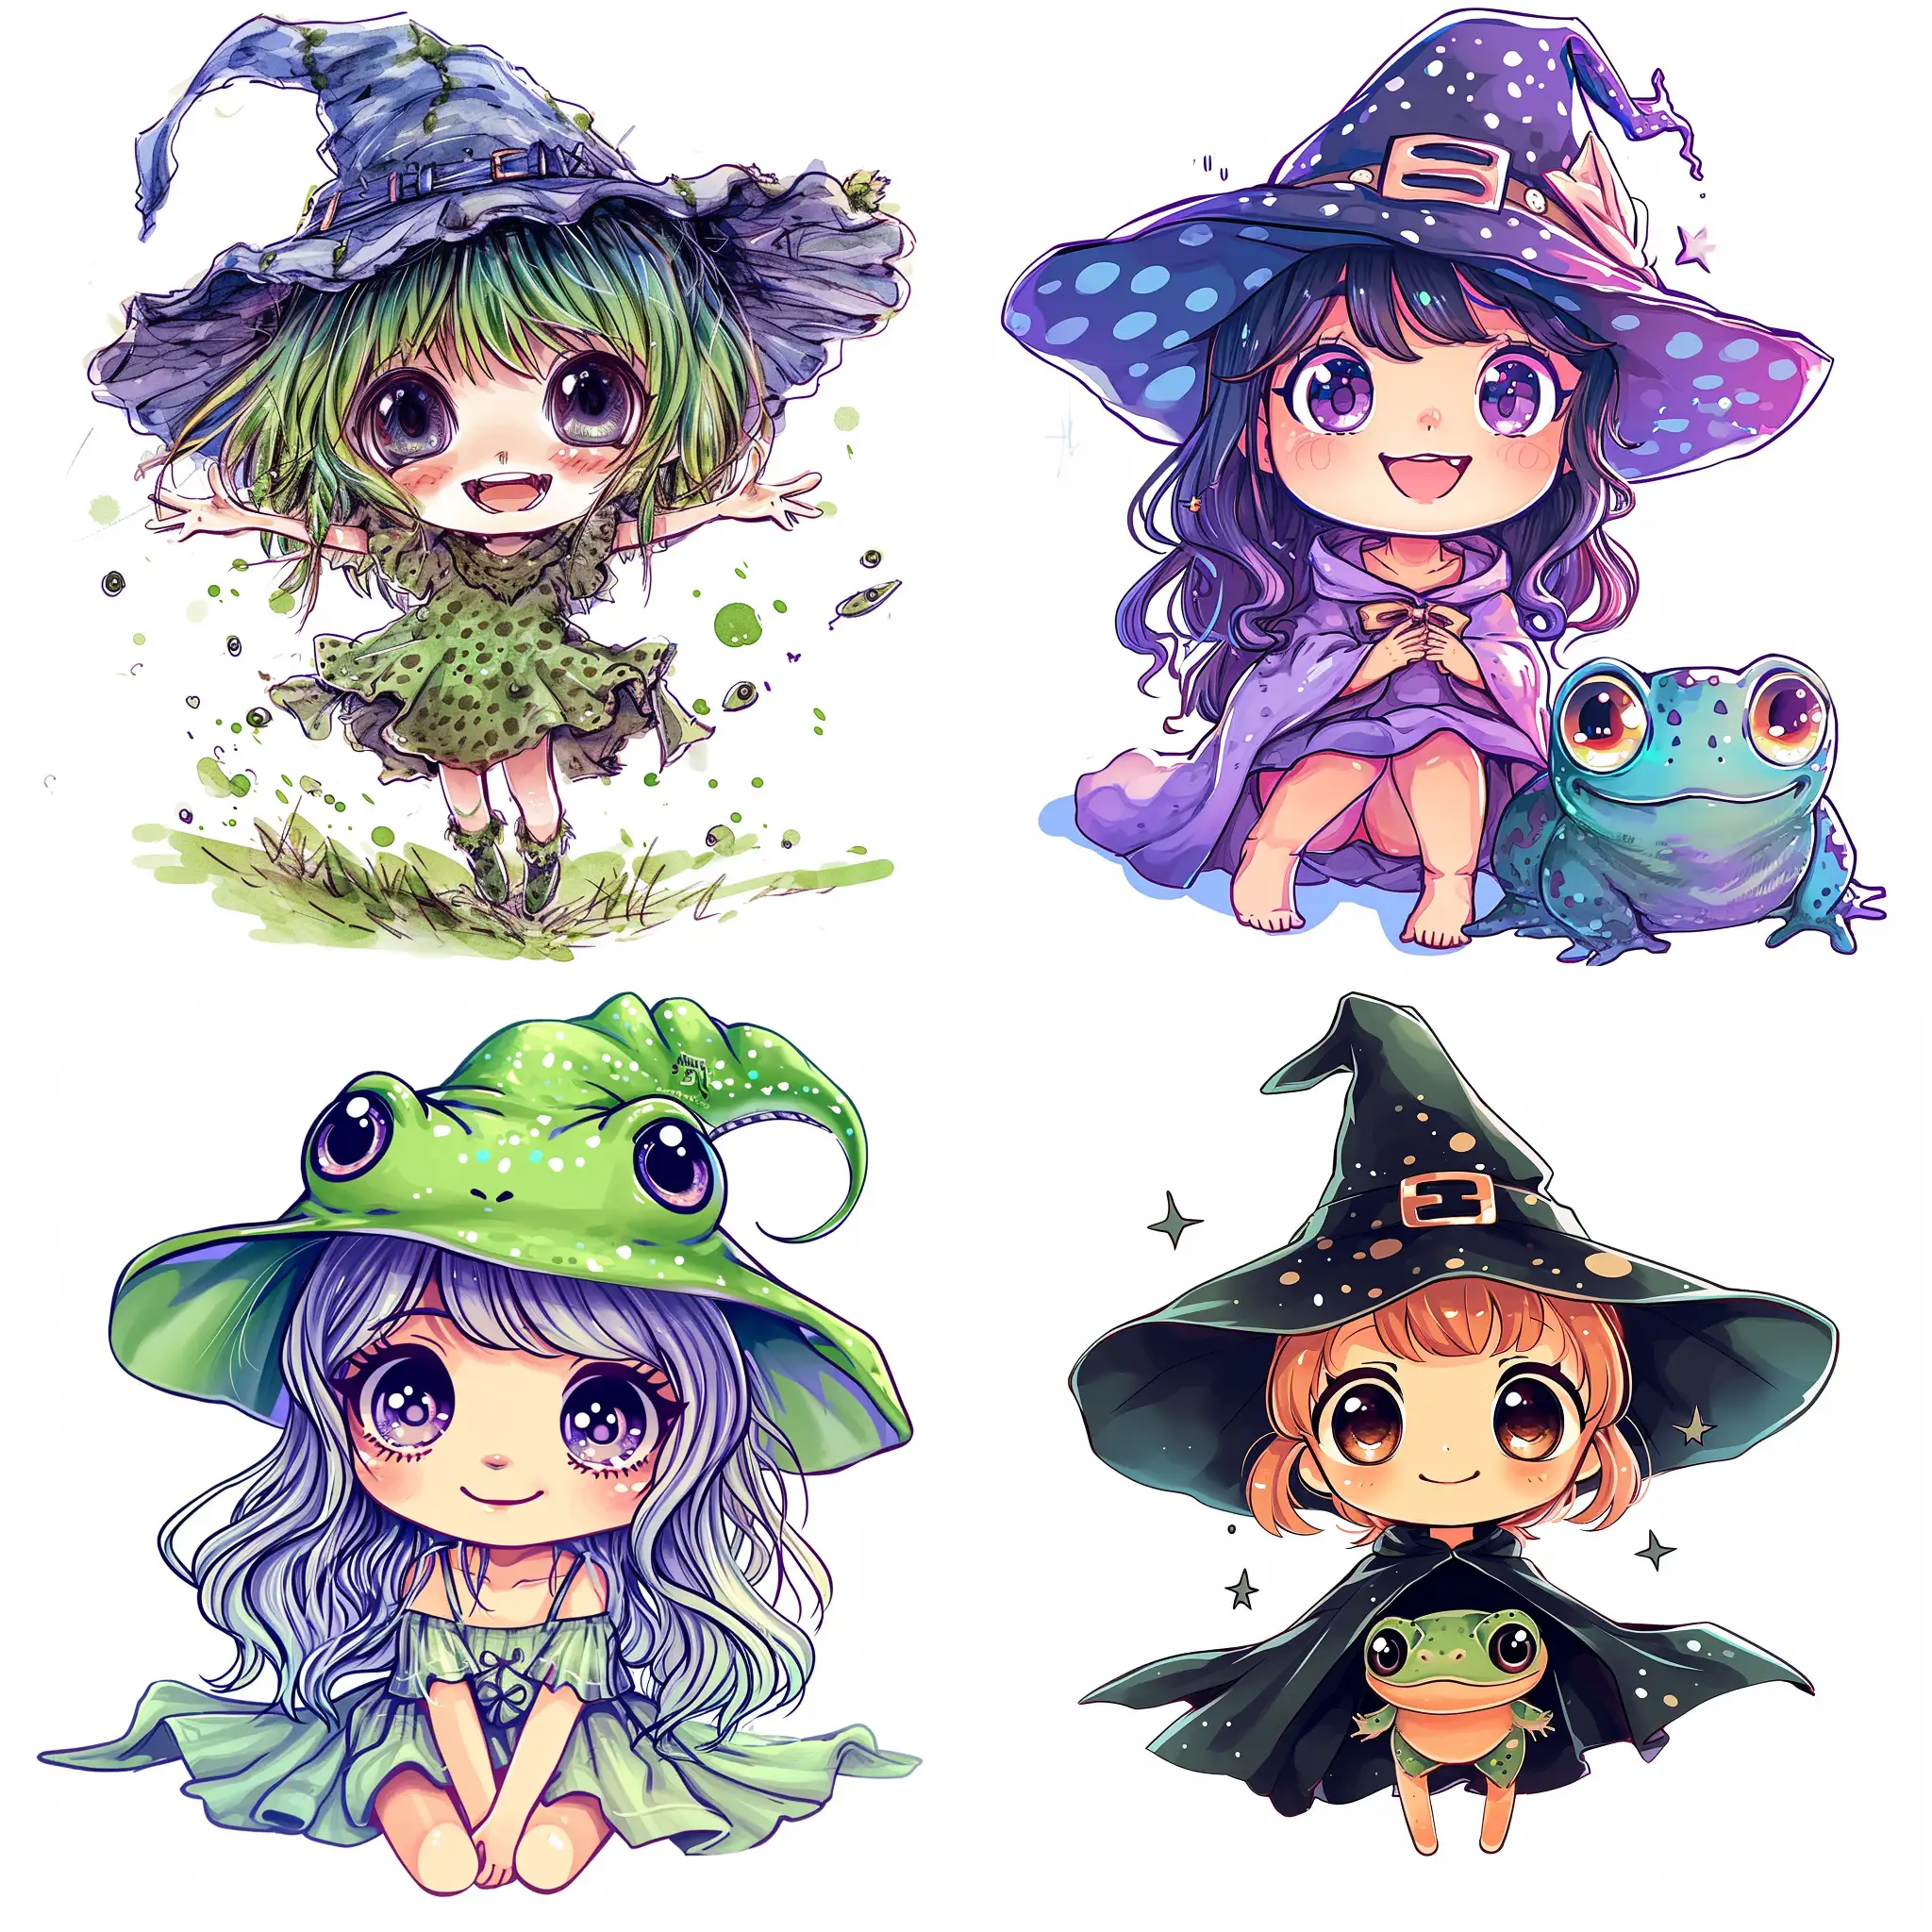 Joyful-Cute-Chibi-Newt-Witch-in-Vibrant-Anime-Style